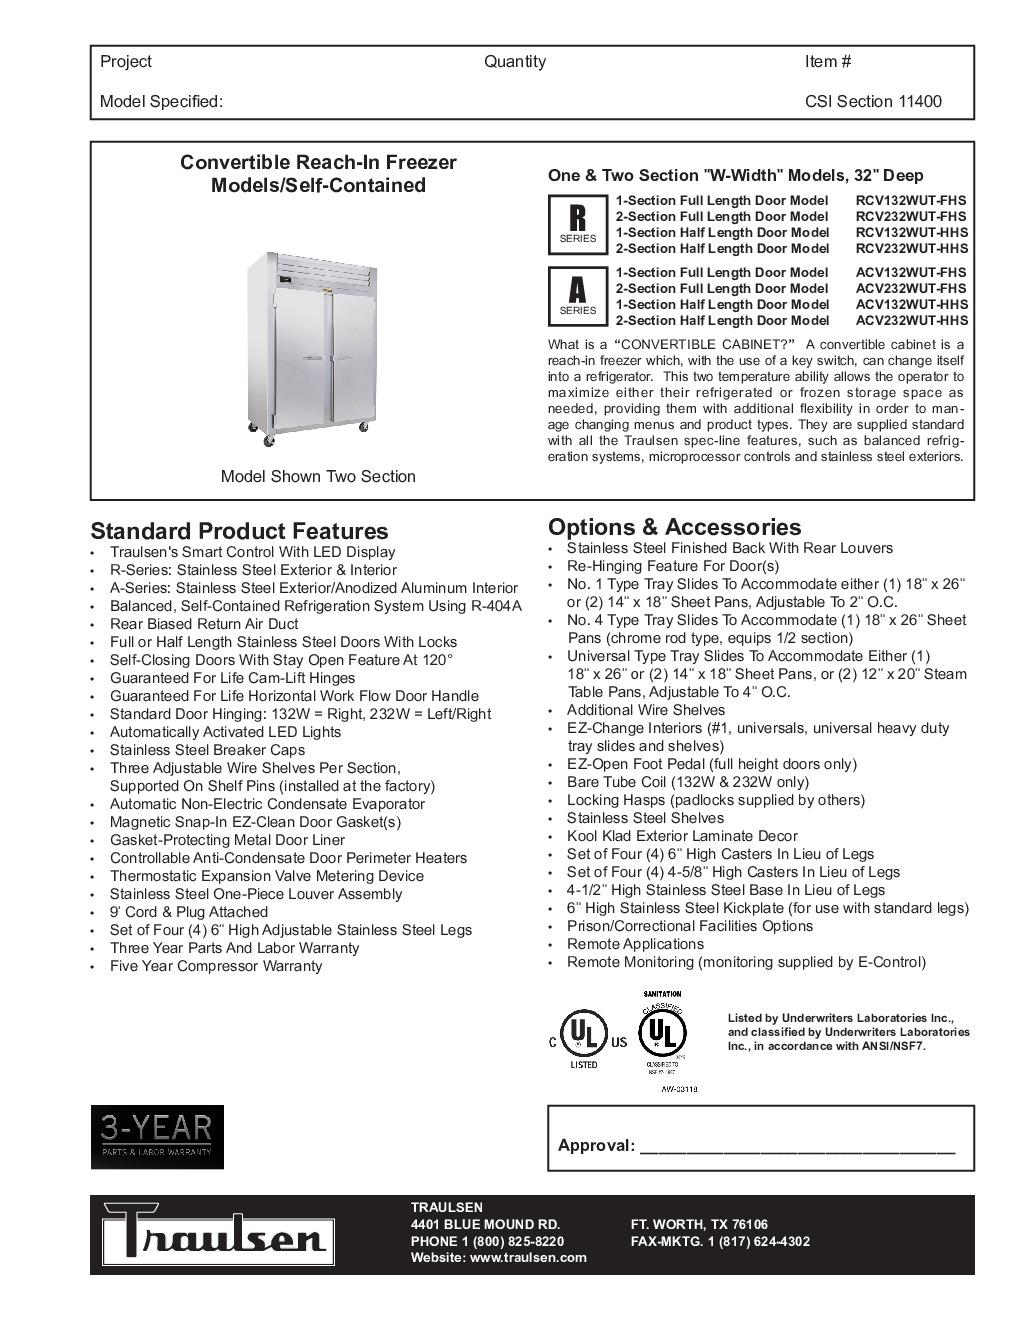 Traulsen ACV132WUT-HHS Convertible Refrigerator Freezer